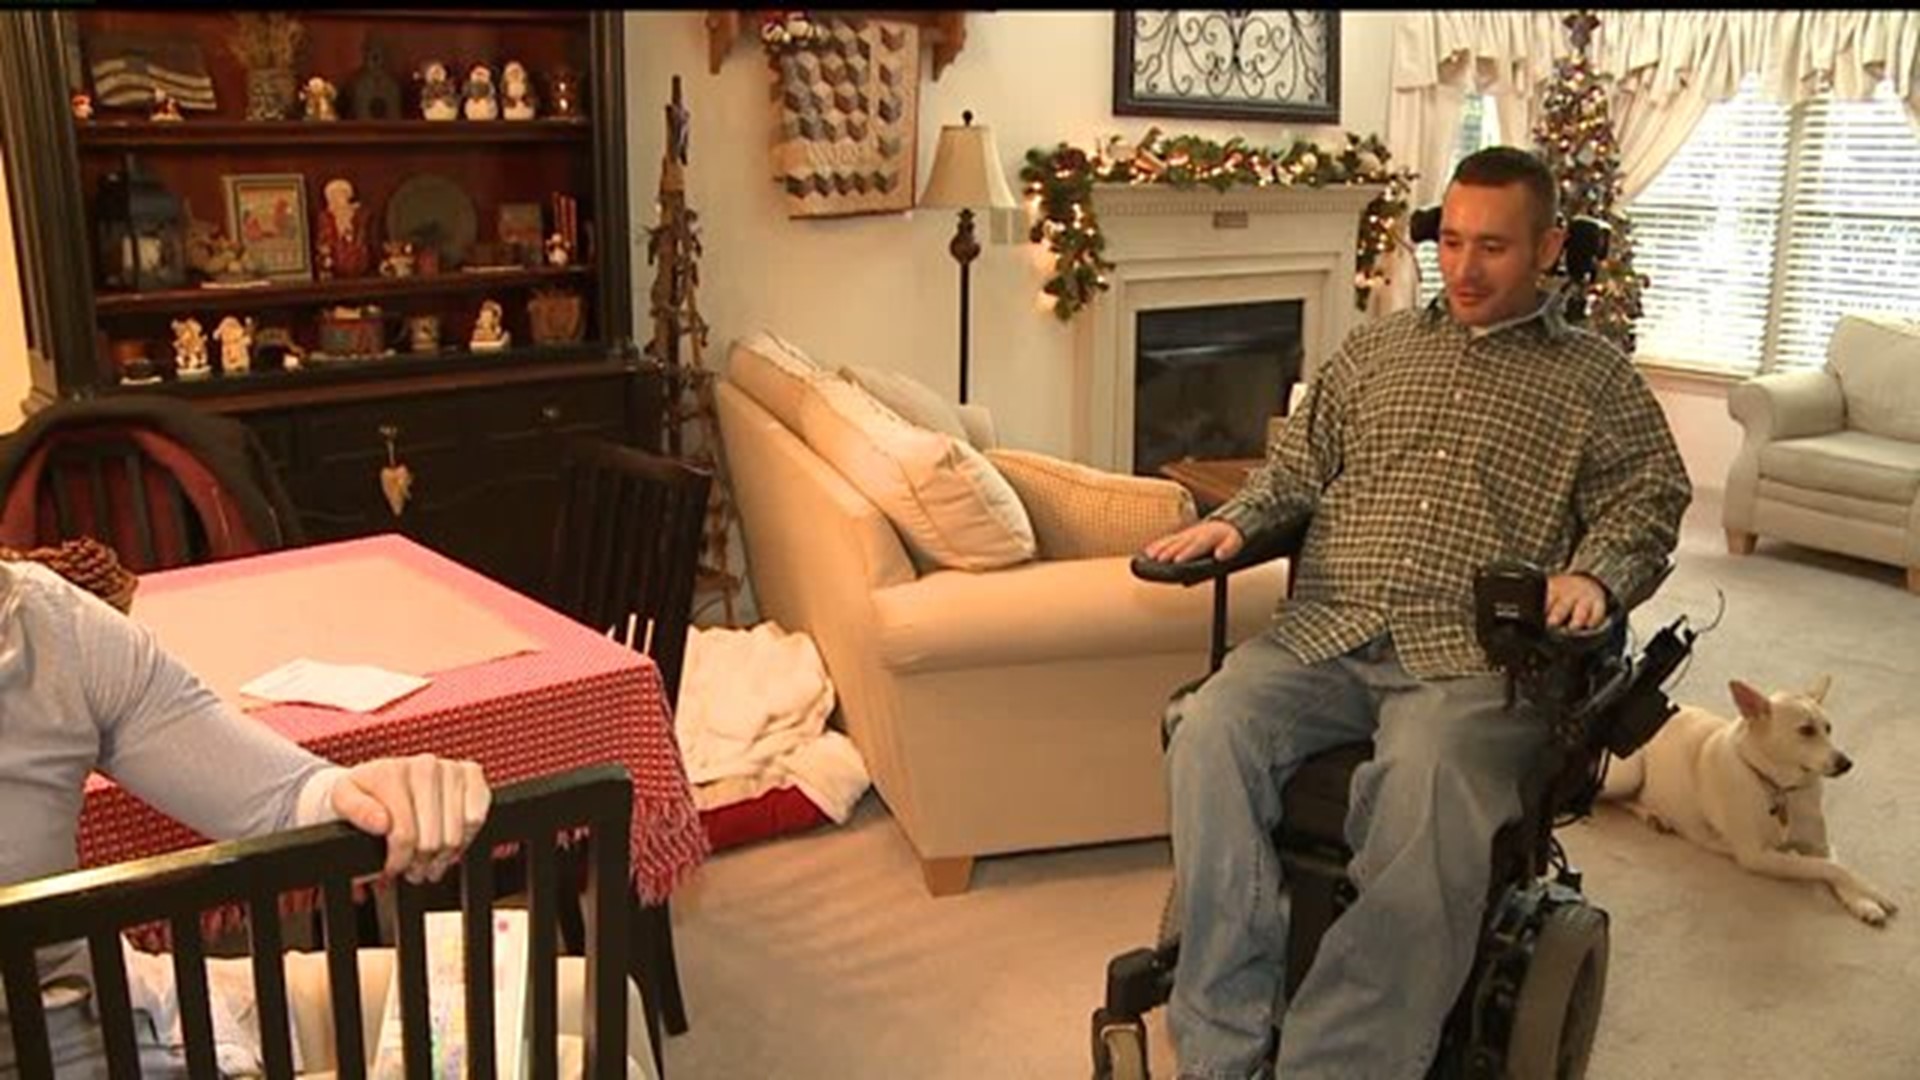 Raising Money to Help Paralyzed Dauphin County Man